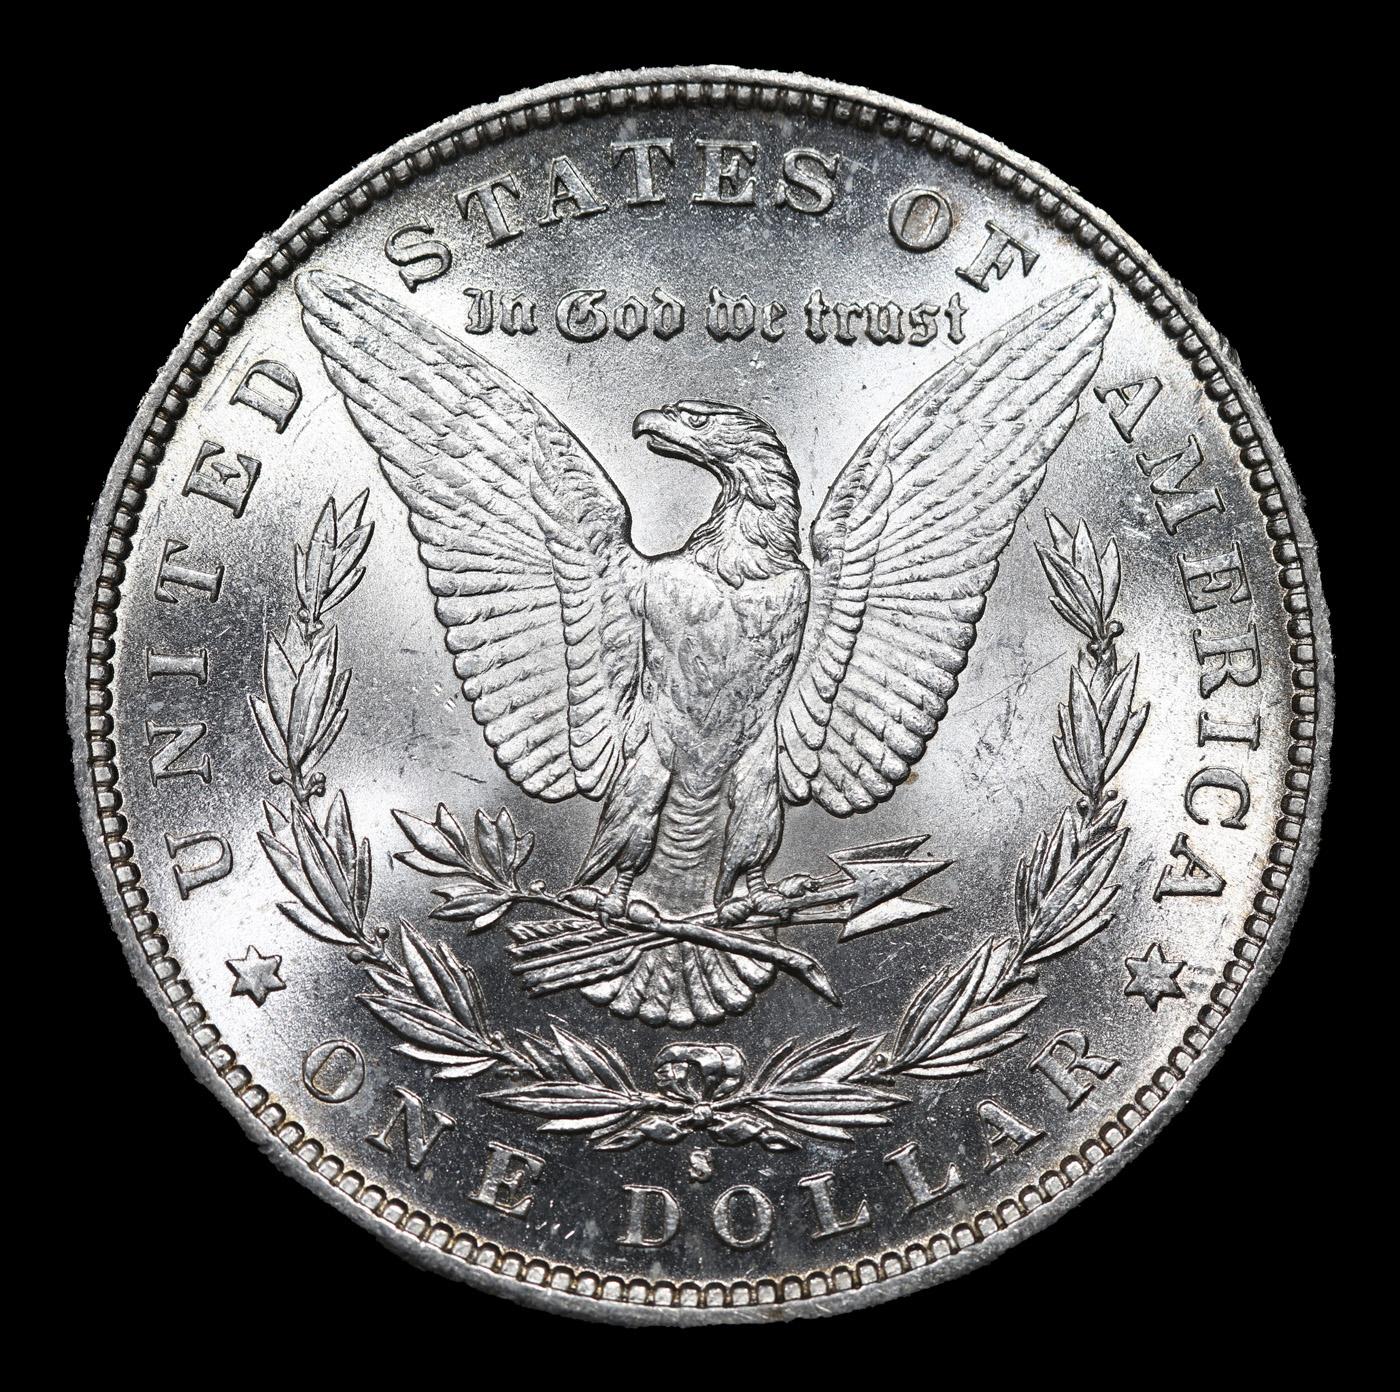 ***Auction Highlight*** 1890-s Morgan Dollar 1 Graded ms66+ By SEGS (fc)